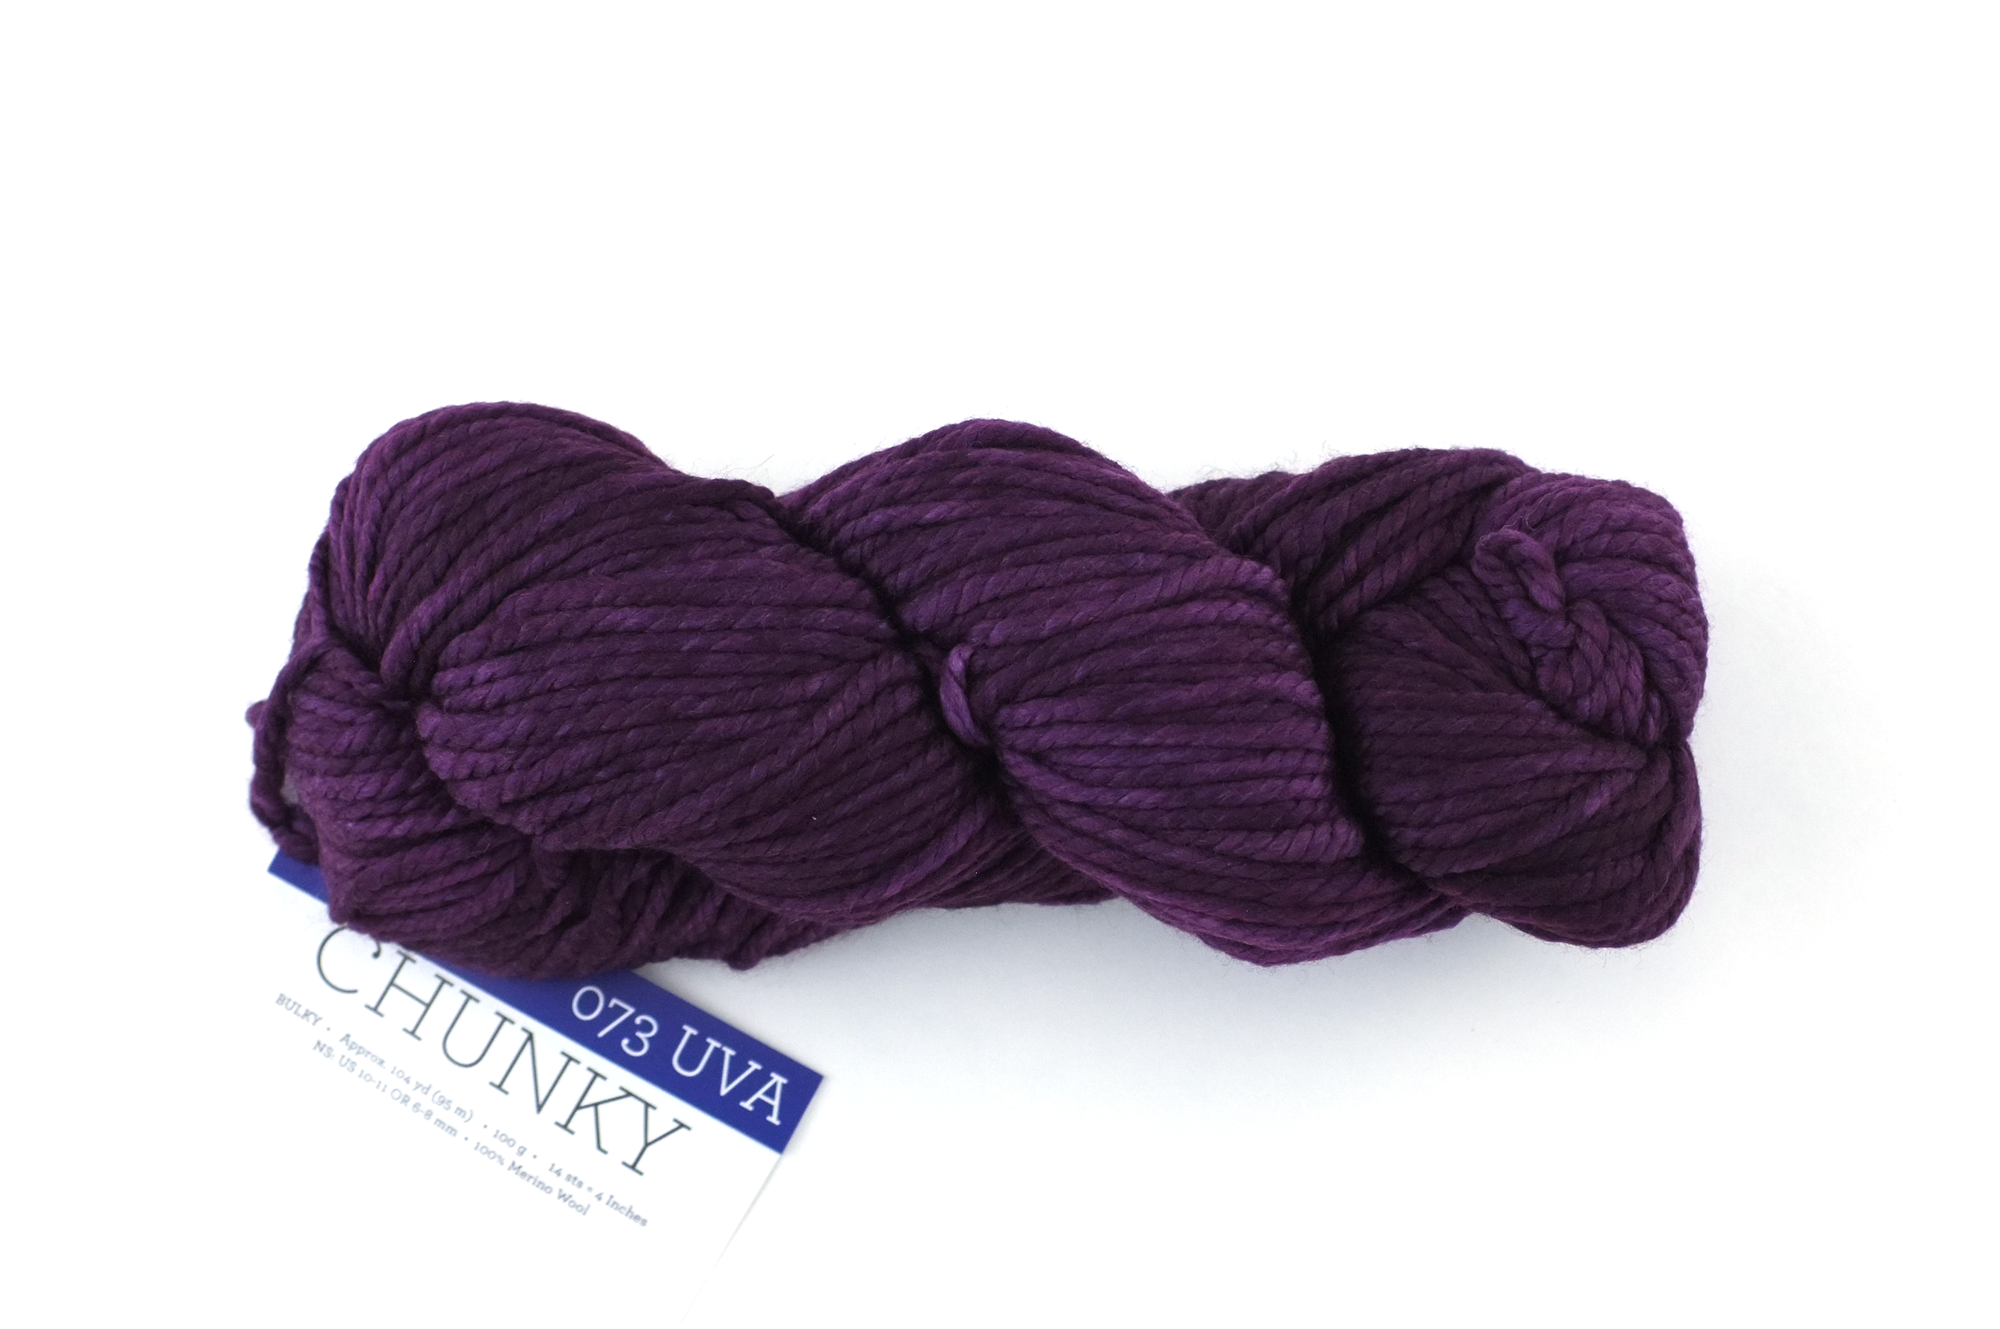 Malabrigo Chunky in color Uva, Bulky Weight Merino Wool Knitting Yarn, dark  grape purple, #073